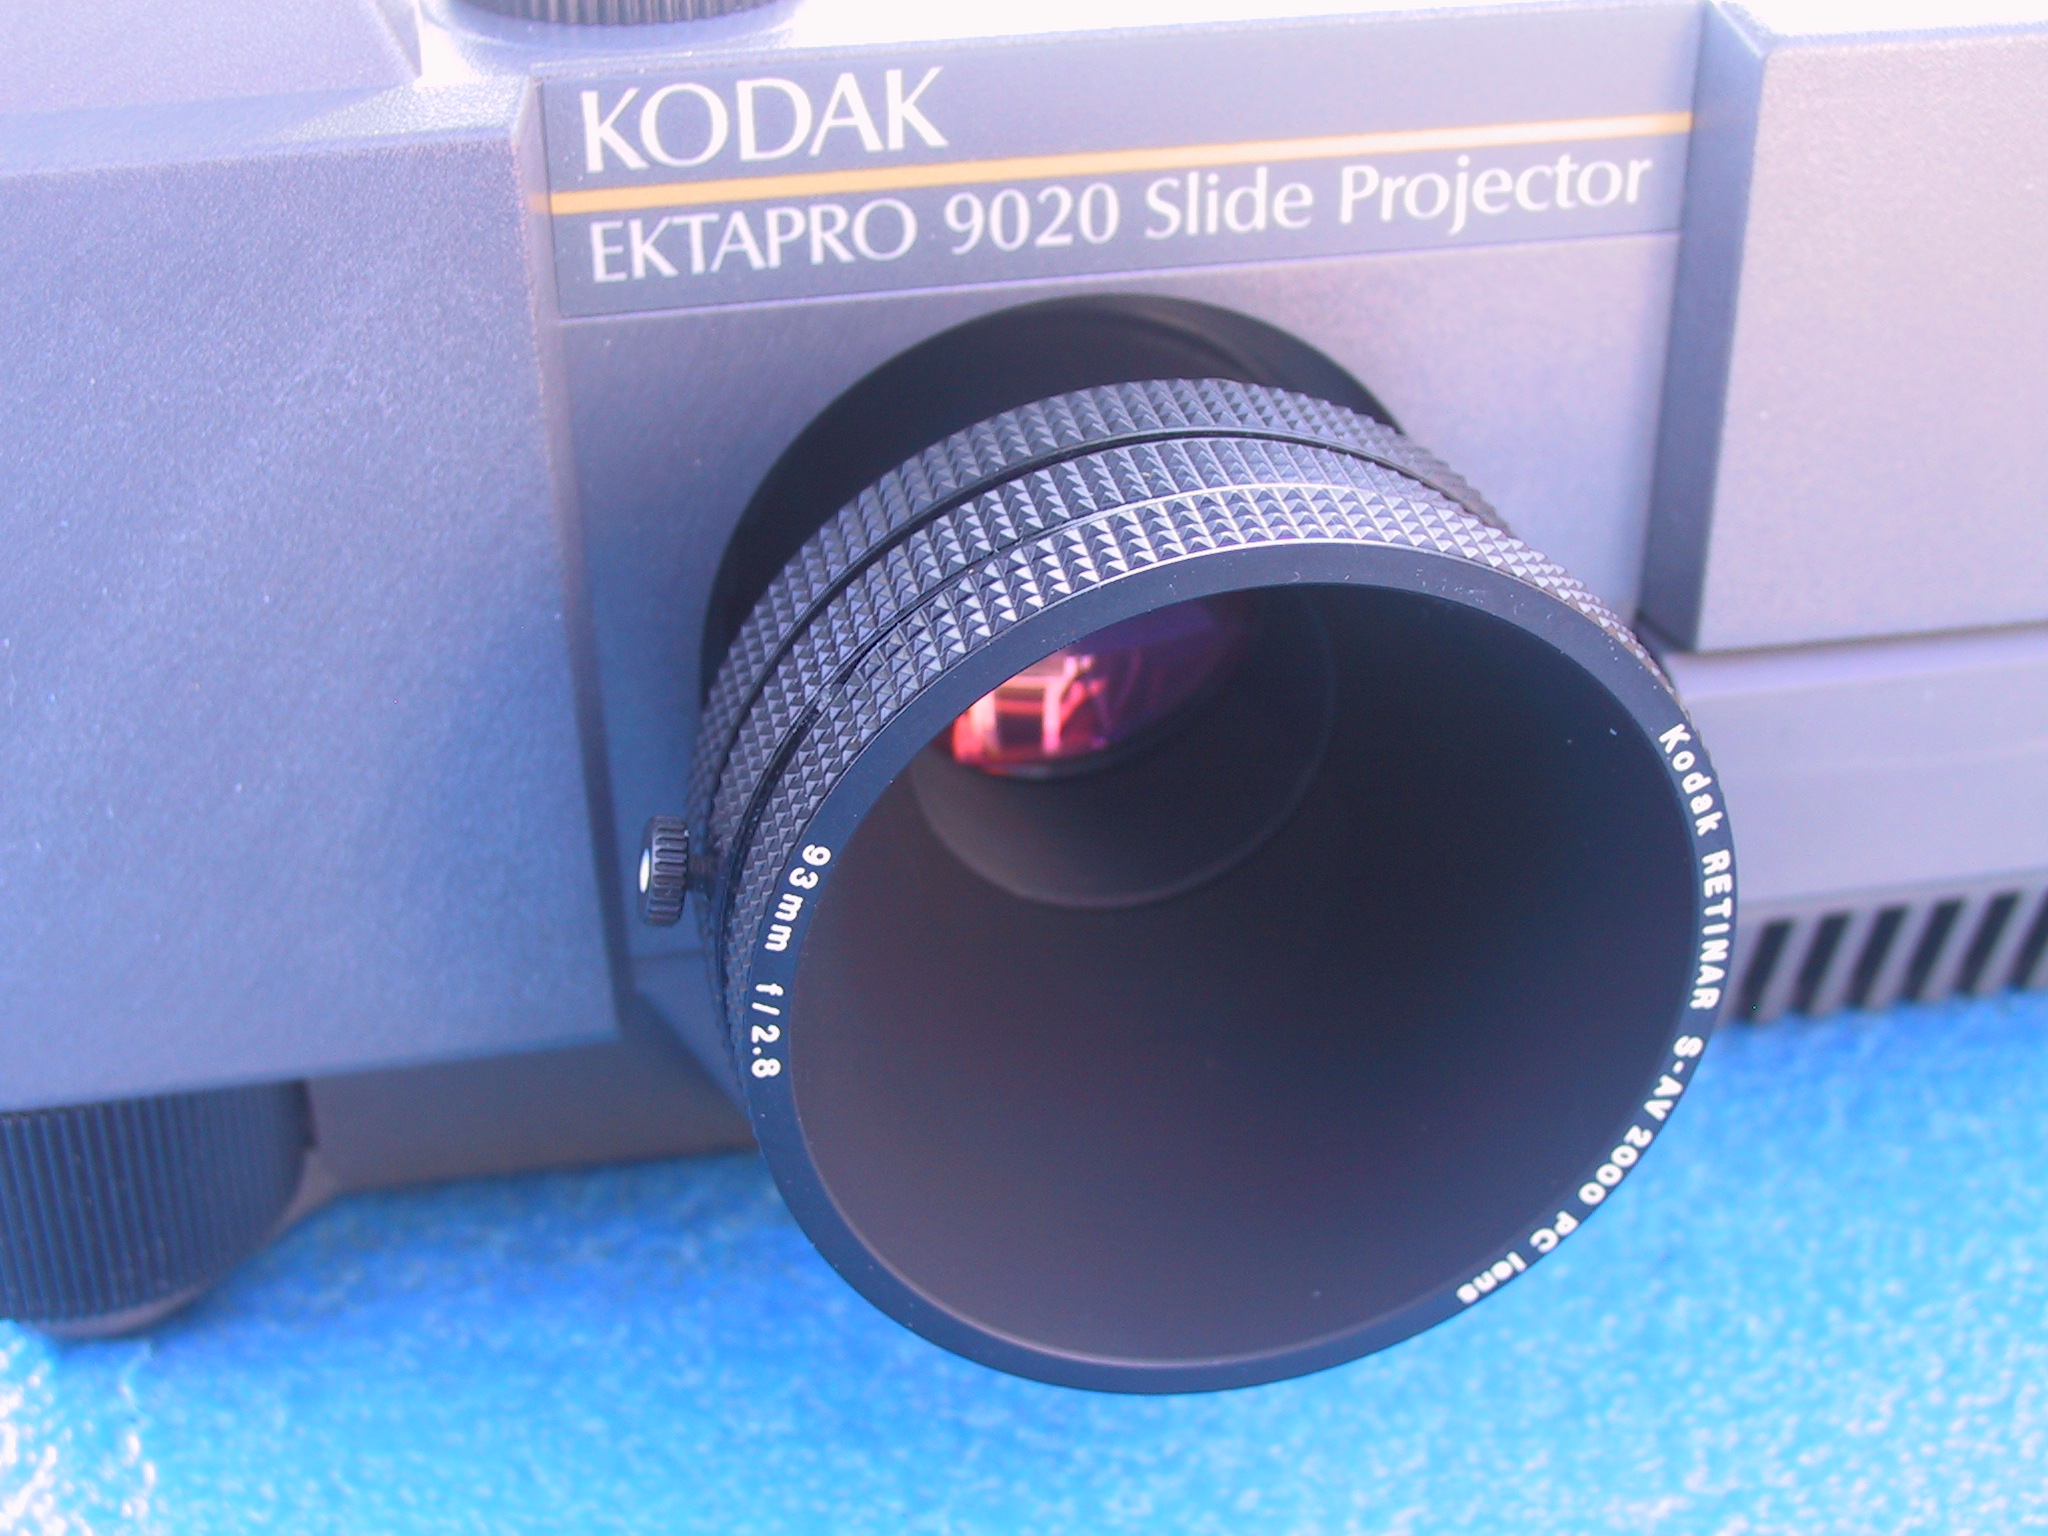 Kodak 93mm 2.8 PC Retinar S-AV Lens - KX Camera Kodak Slide Projectors Since 1980 - 1732-1/2 Grand Ave. Santa Barbara, CA 93103 805-963-5625 